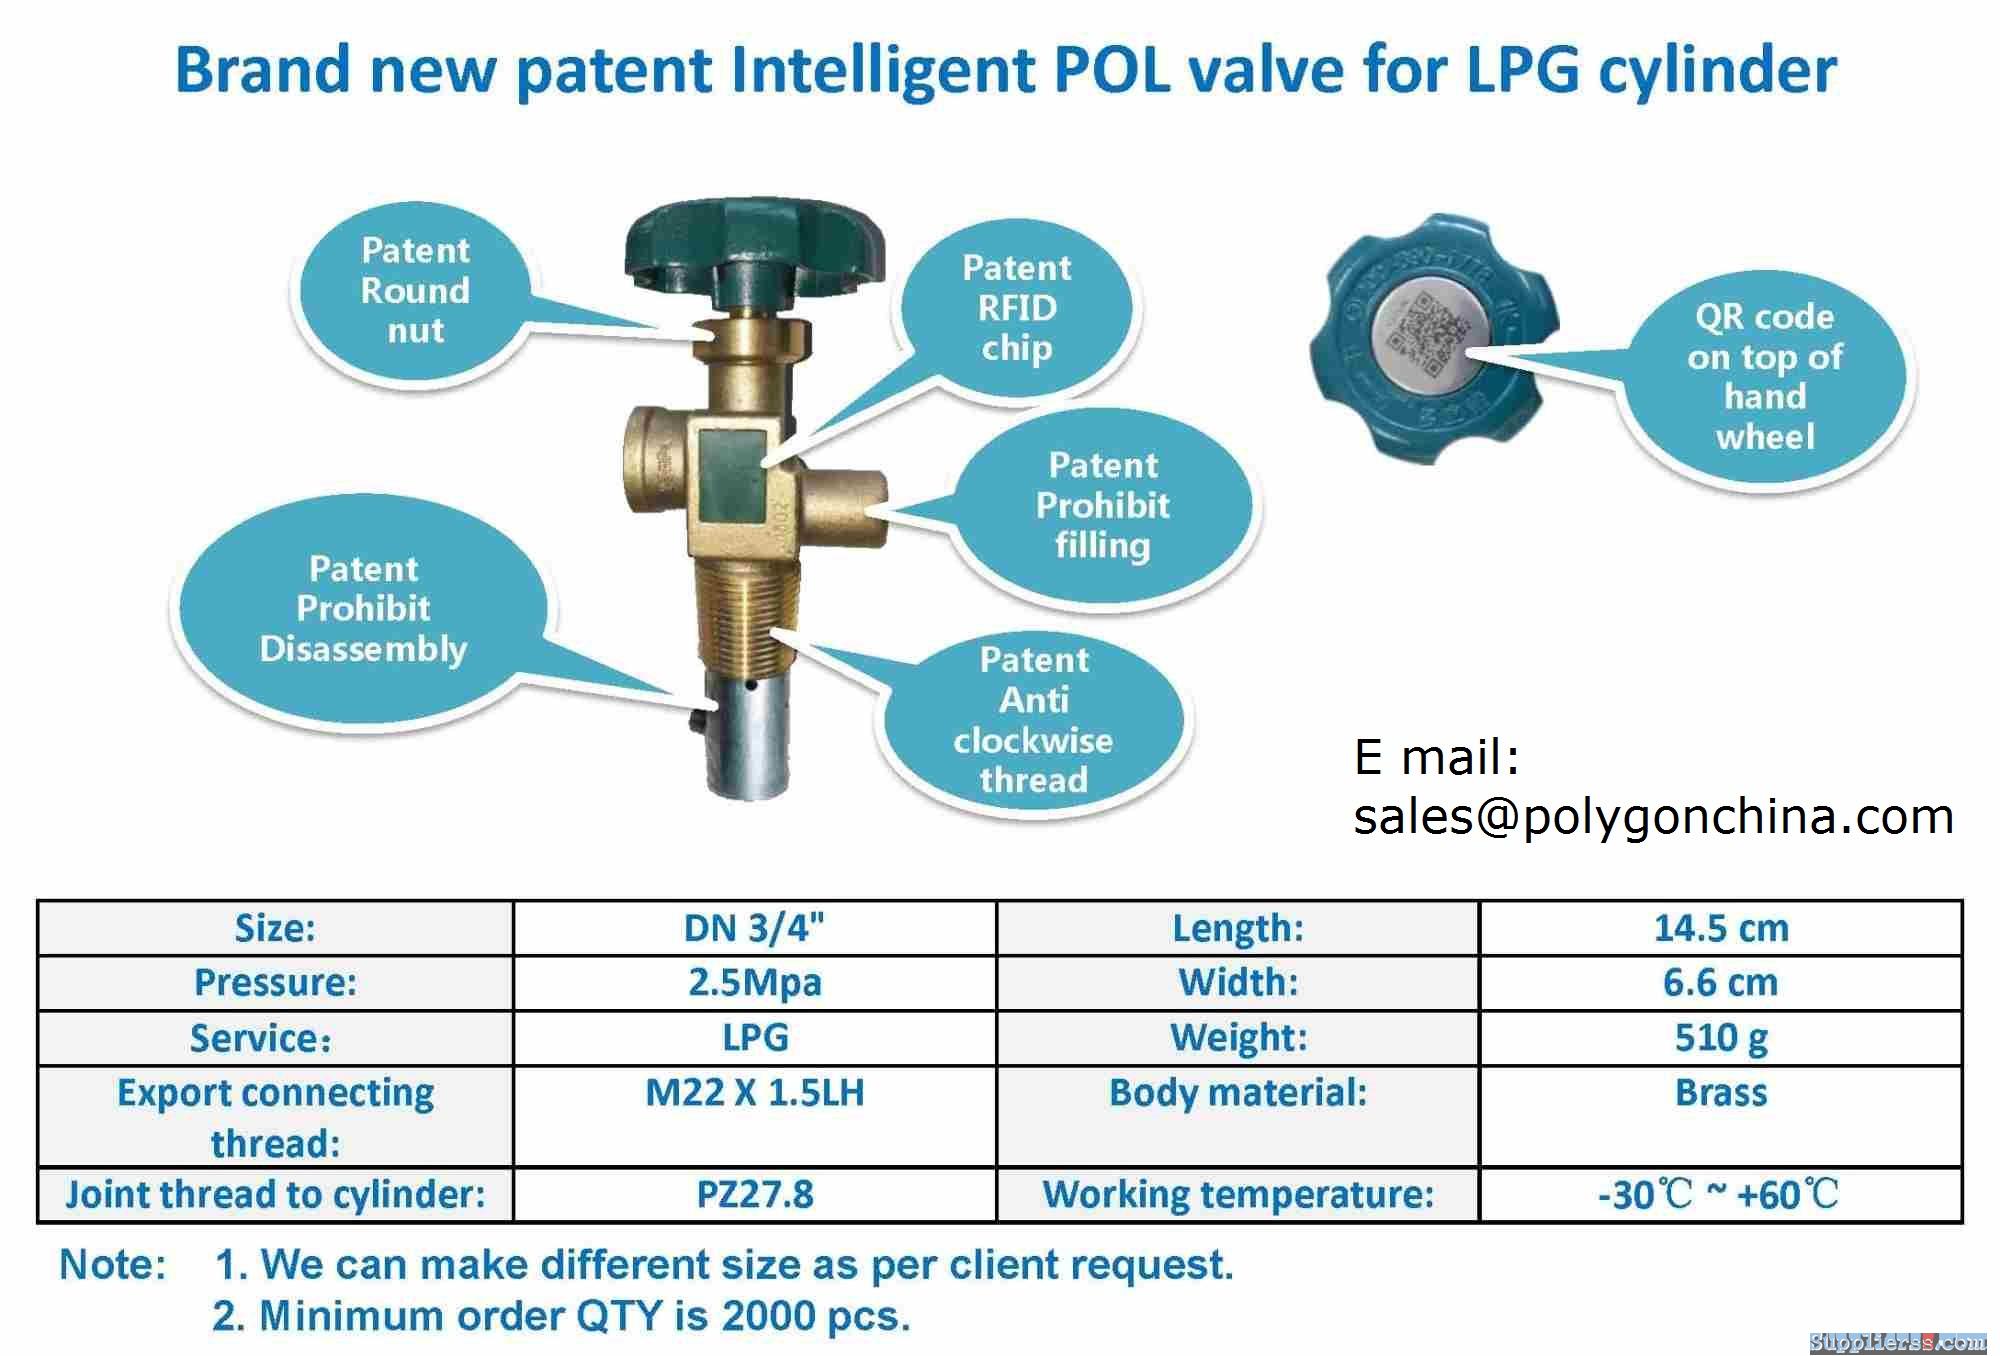 Intelligent valves of LPG cylinders